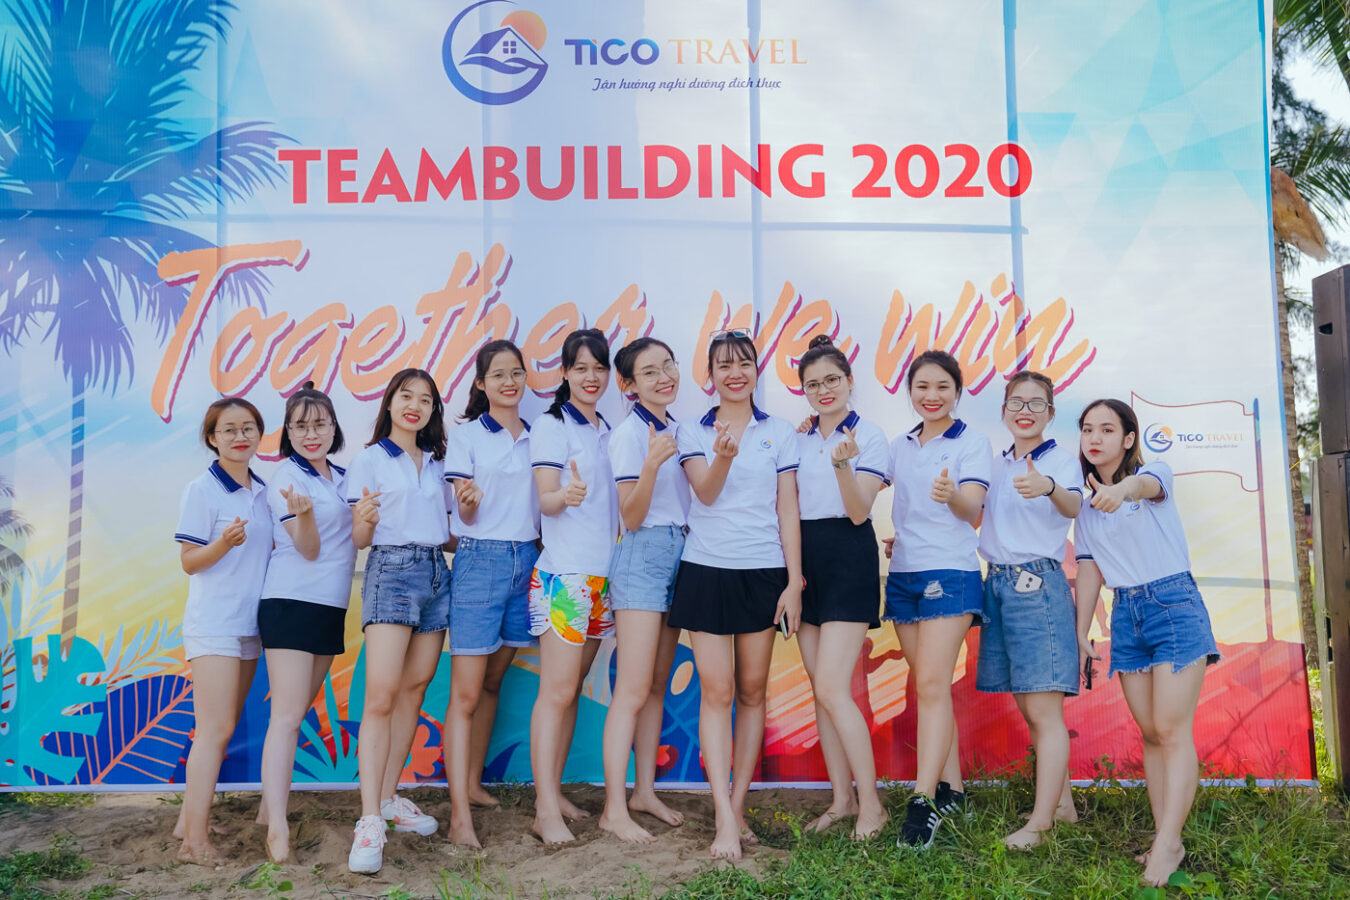 Tico Travel Team Building 2020